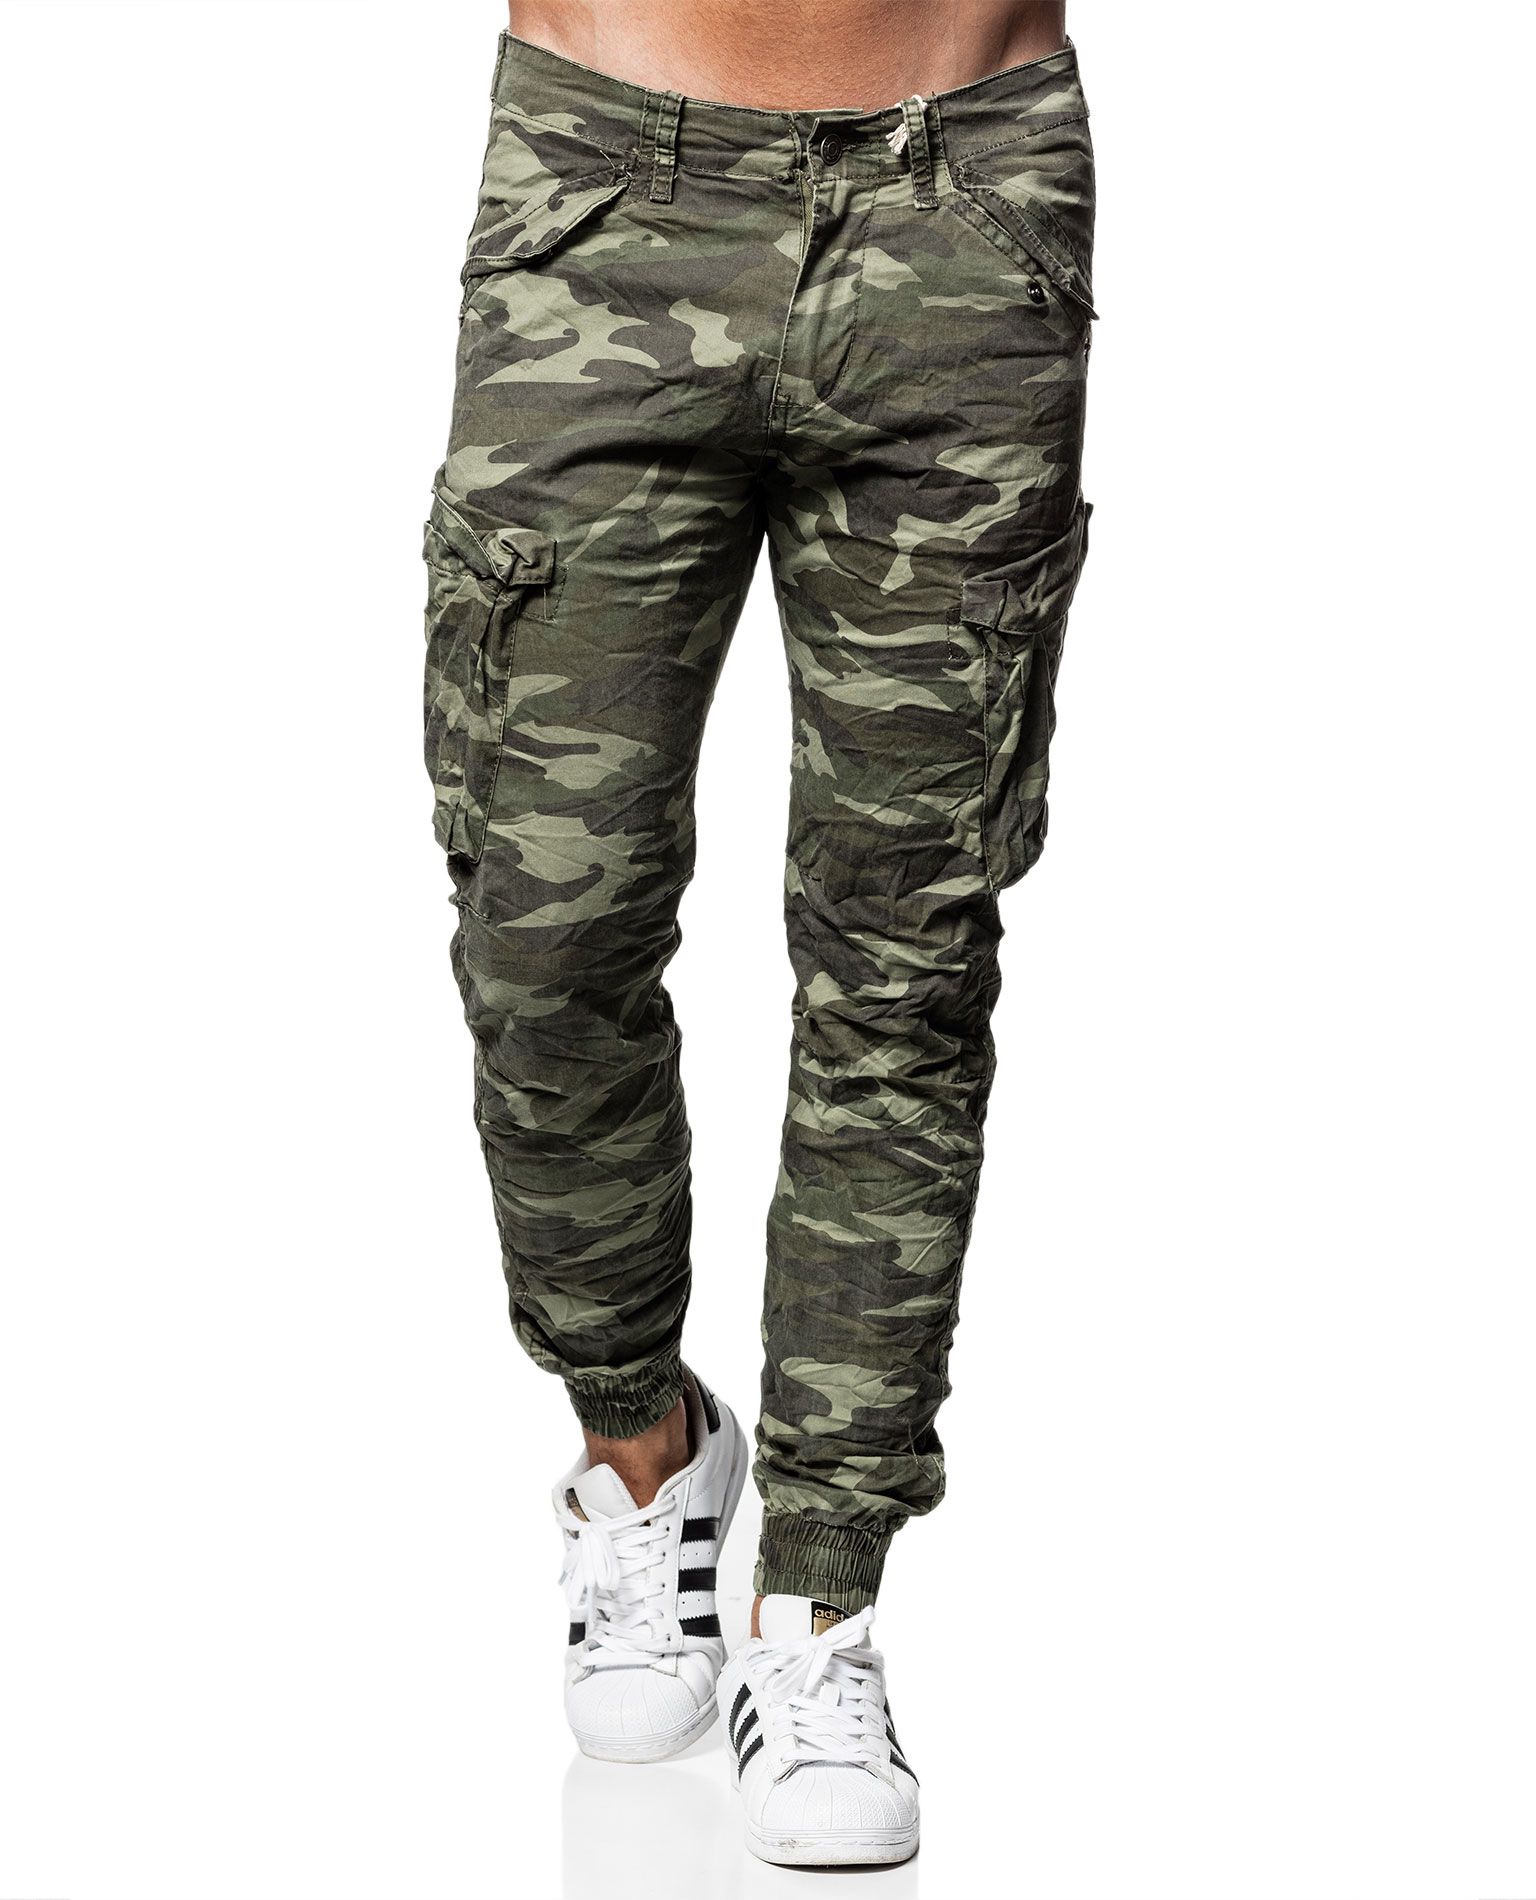 Army Style Pants L32 Jerone - 8308 - Jeans - Jerone.com